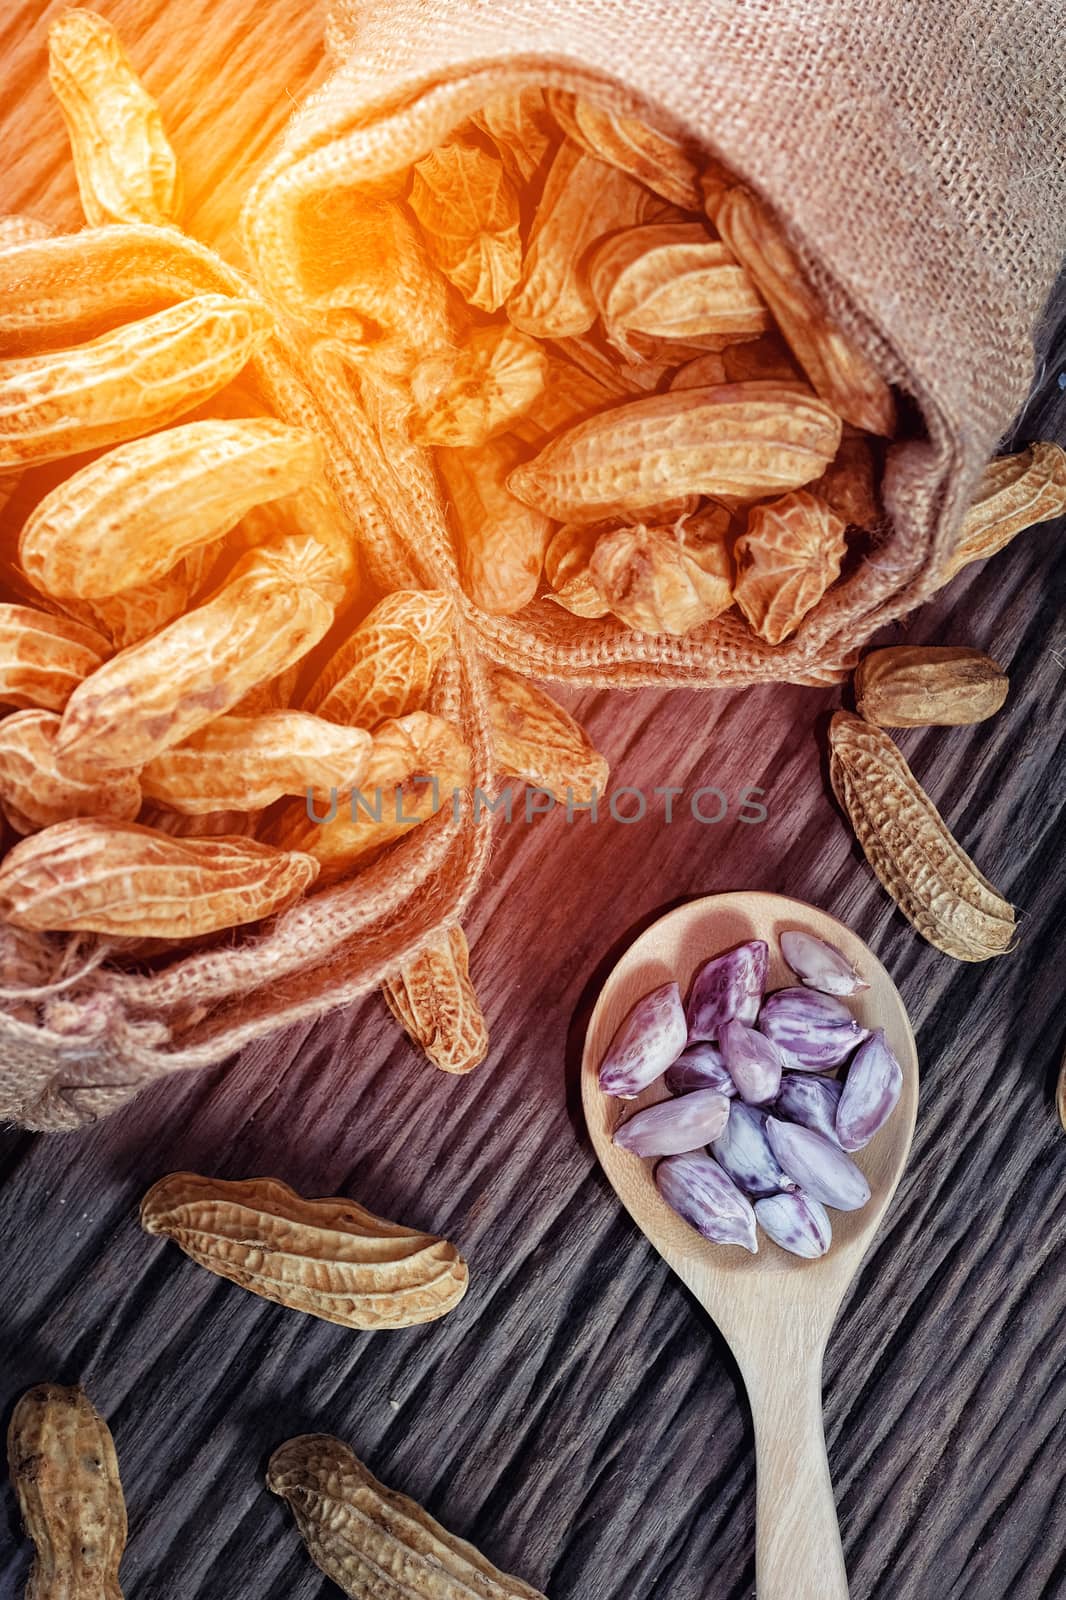 Peanuts on wood background by Surasak